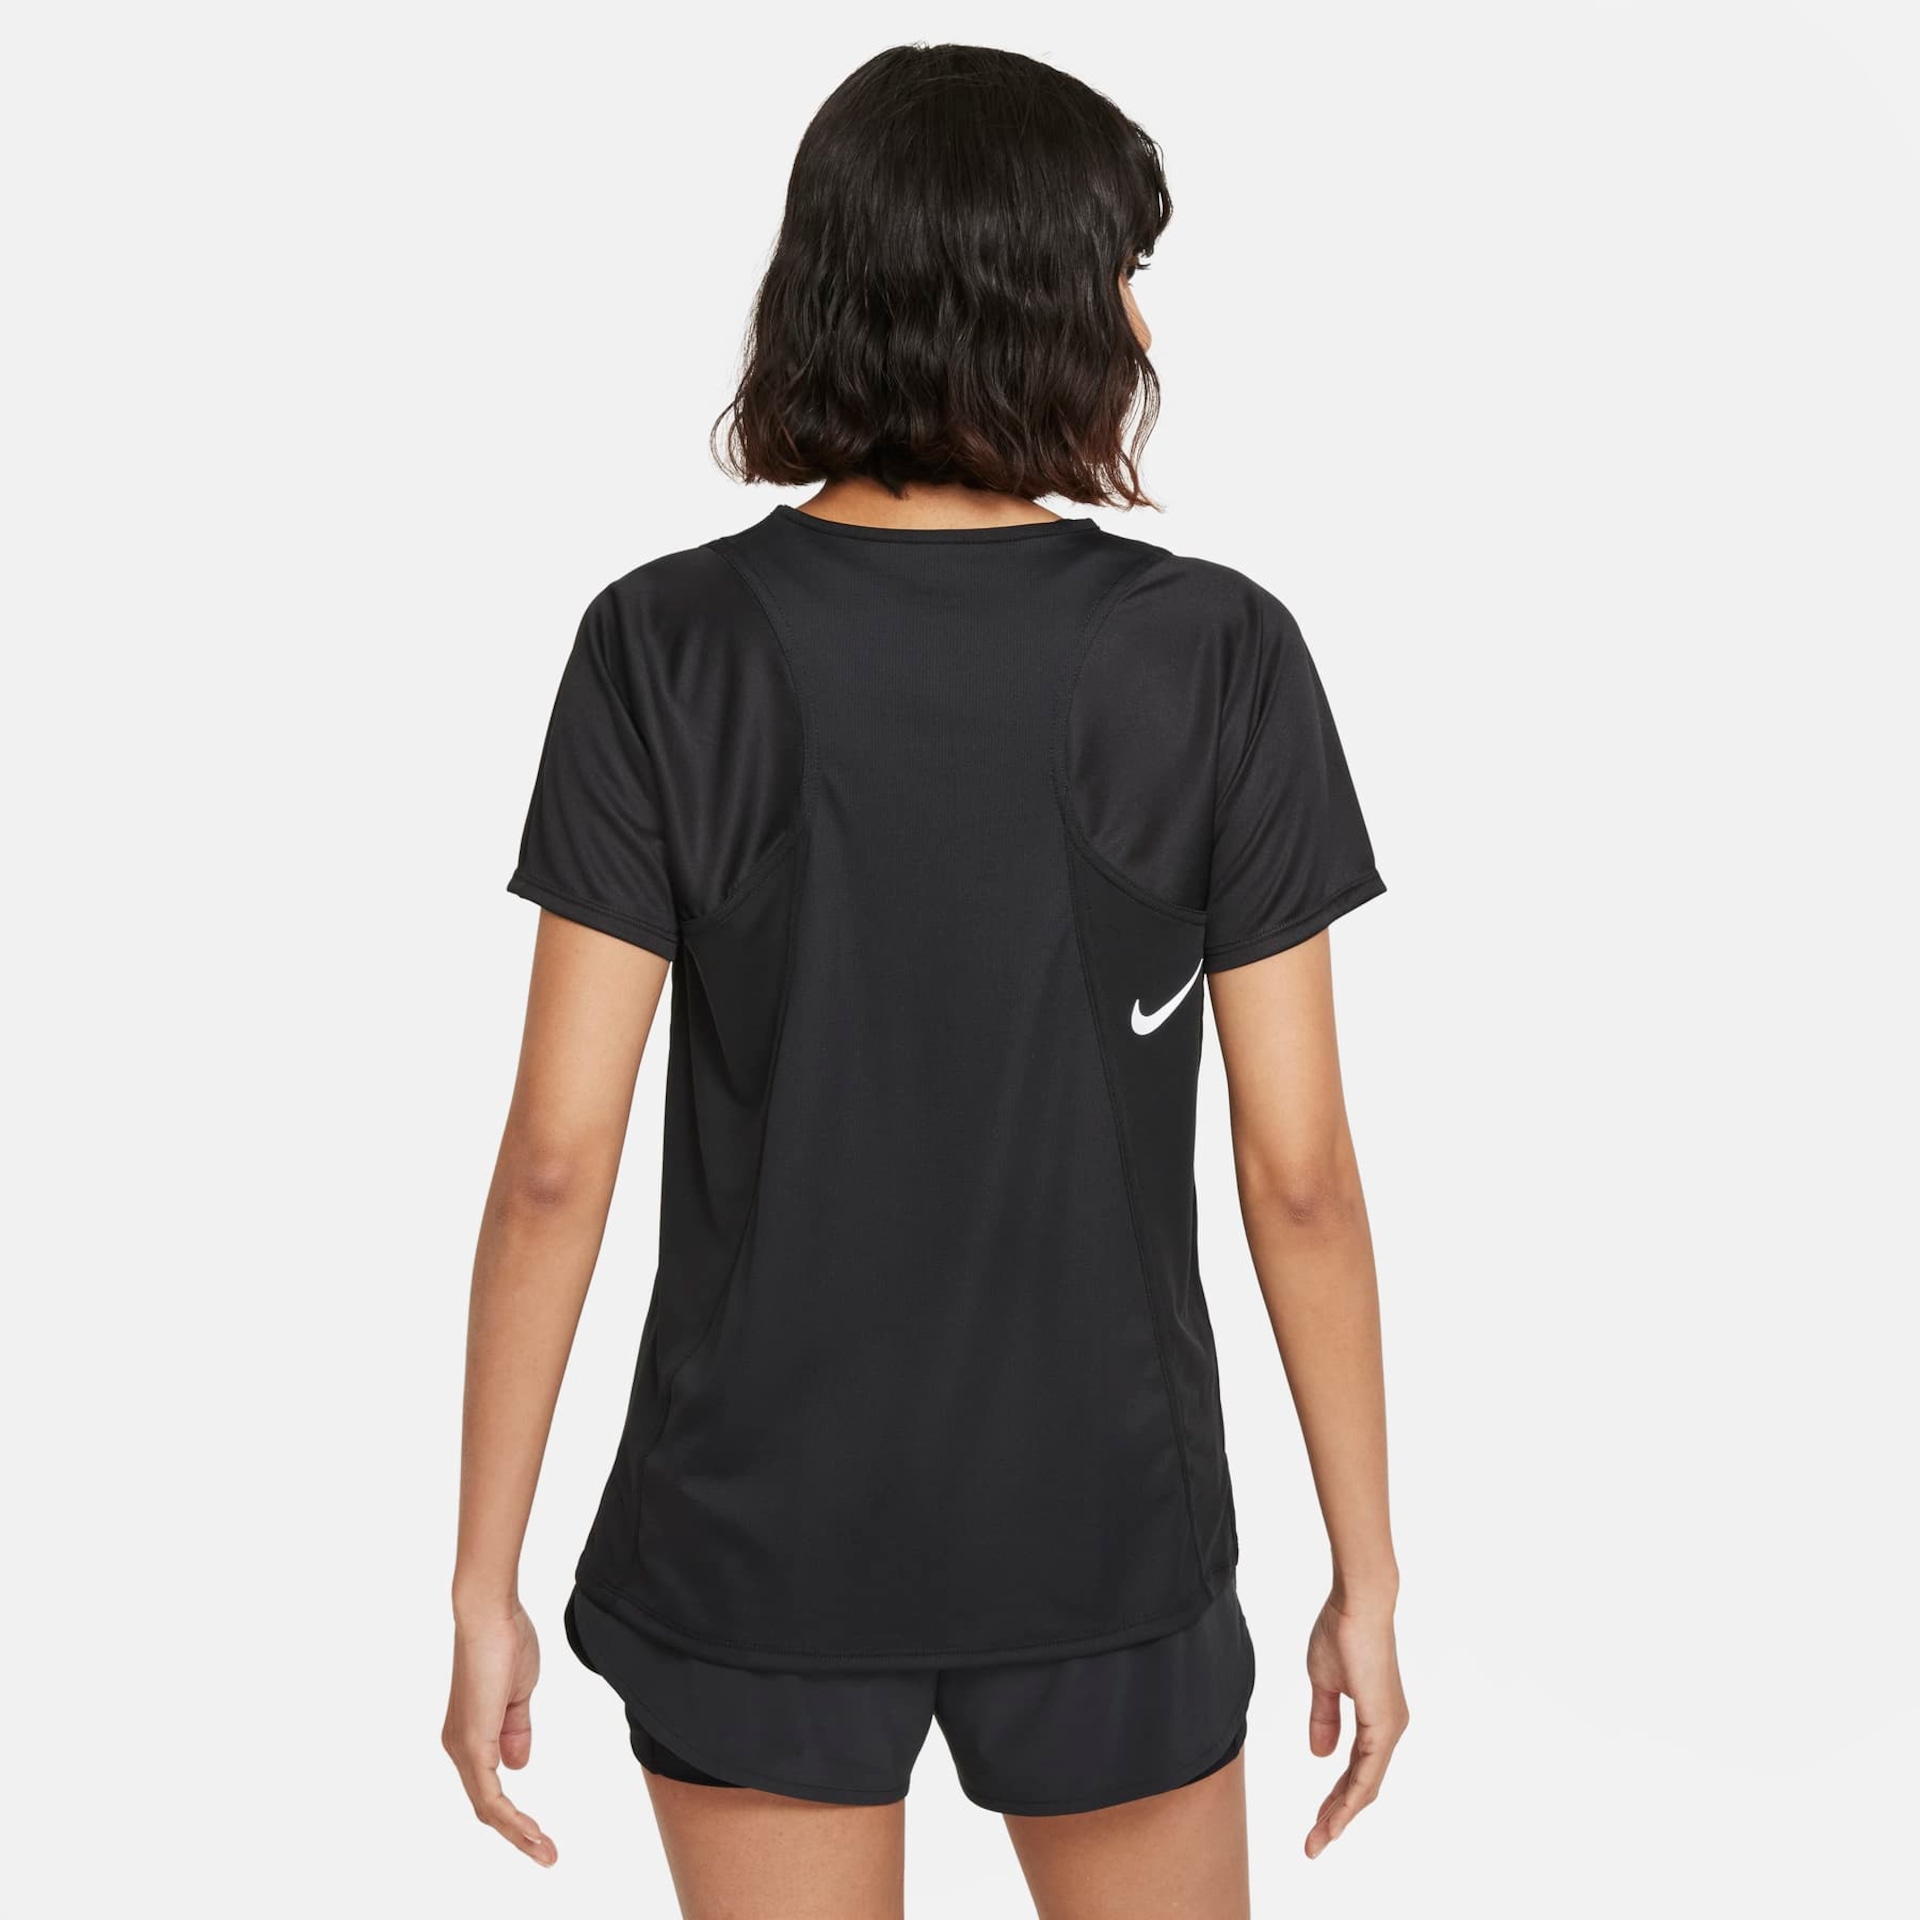 Camiseta Nike Dri-FIT Race Feminina - Foto 2